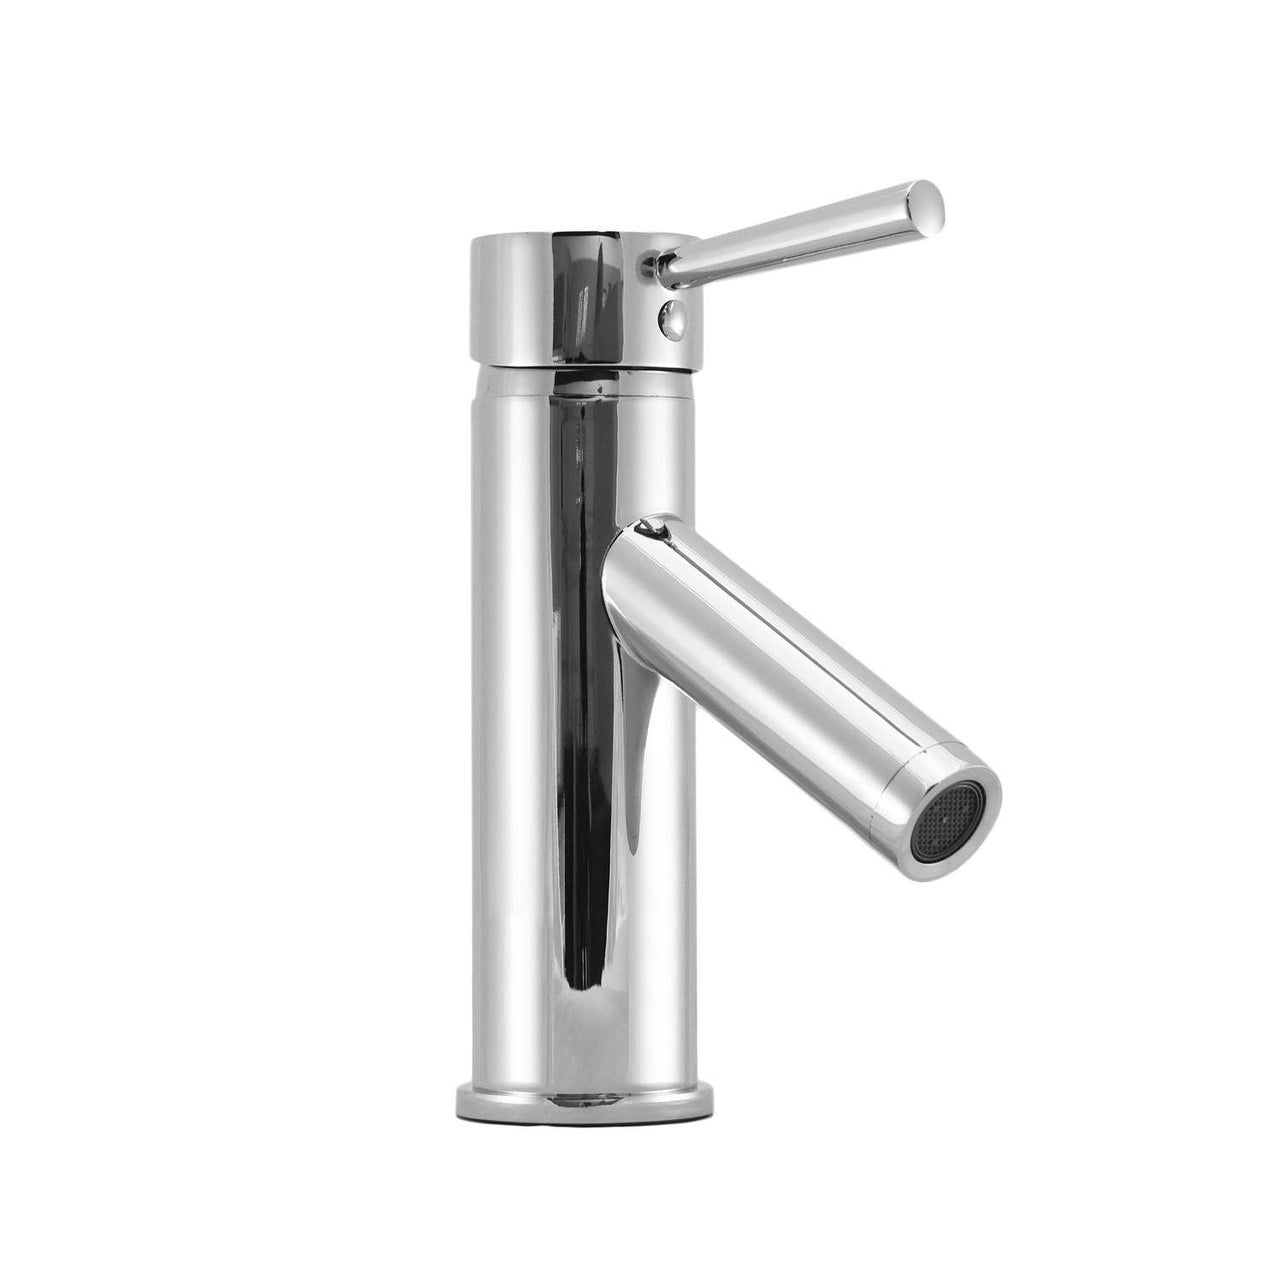 Virtu USA Midori 36" Single Square Sink Plum Top Vanity in Plum with Polished Chrome Faucet and Mirror Vanity Virtu USA 